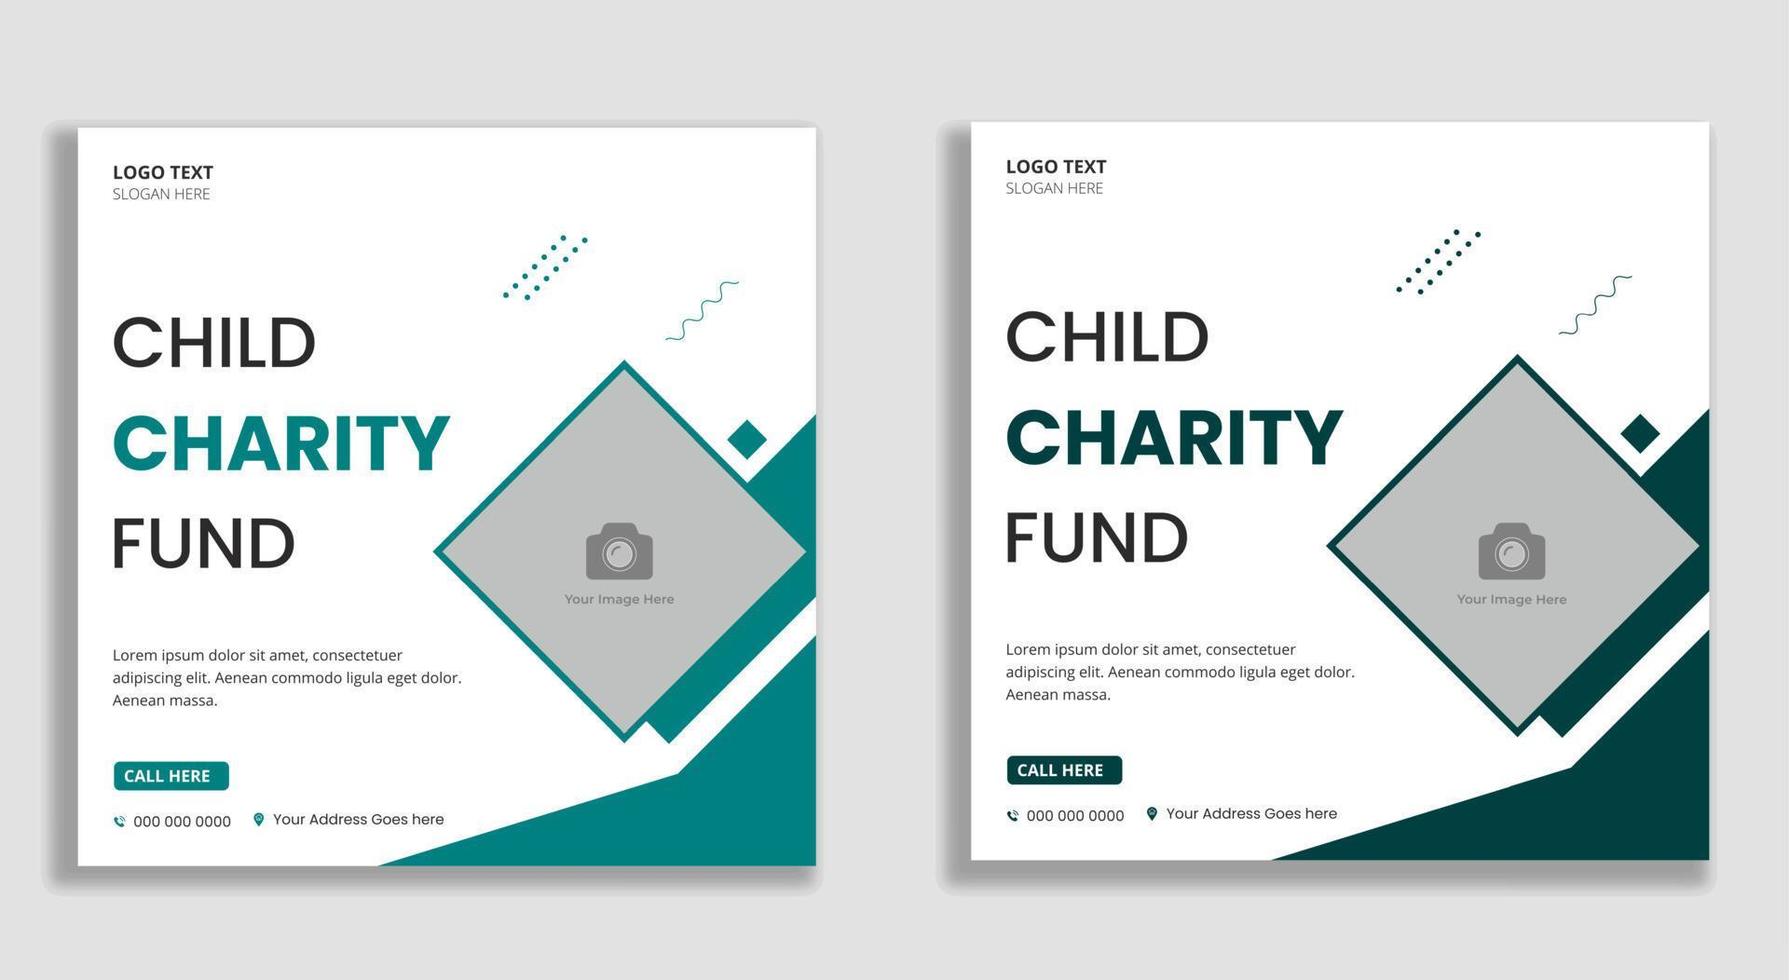 mídia social de caridade de fundo infantil e banner da web vetor